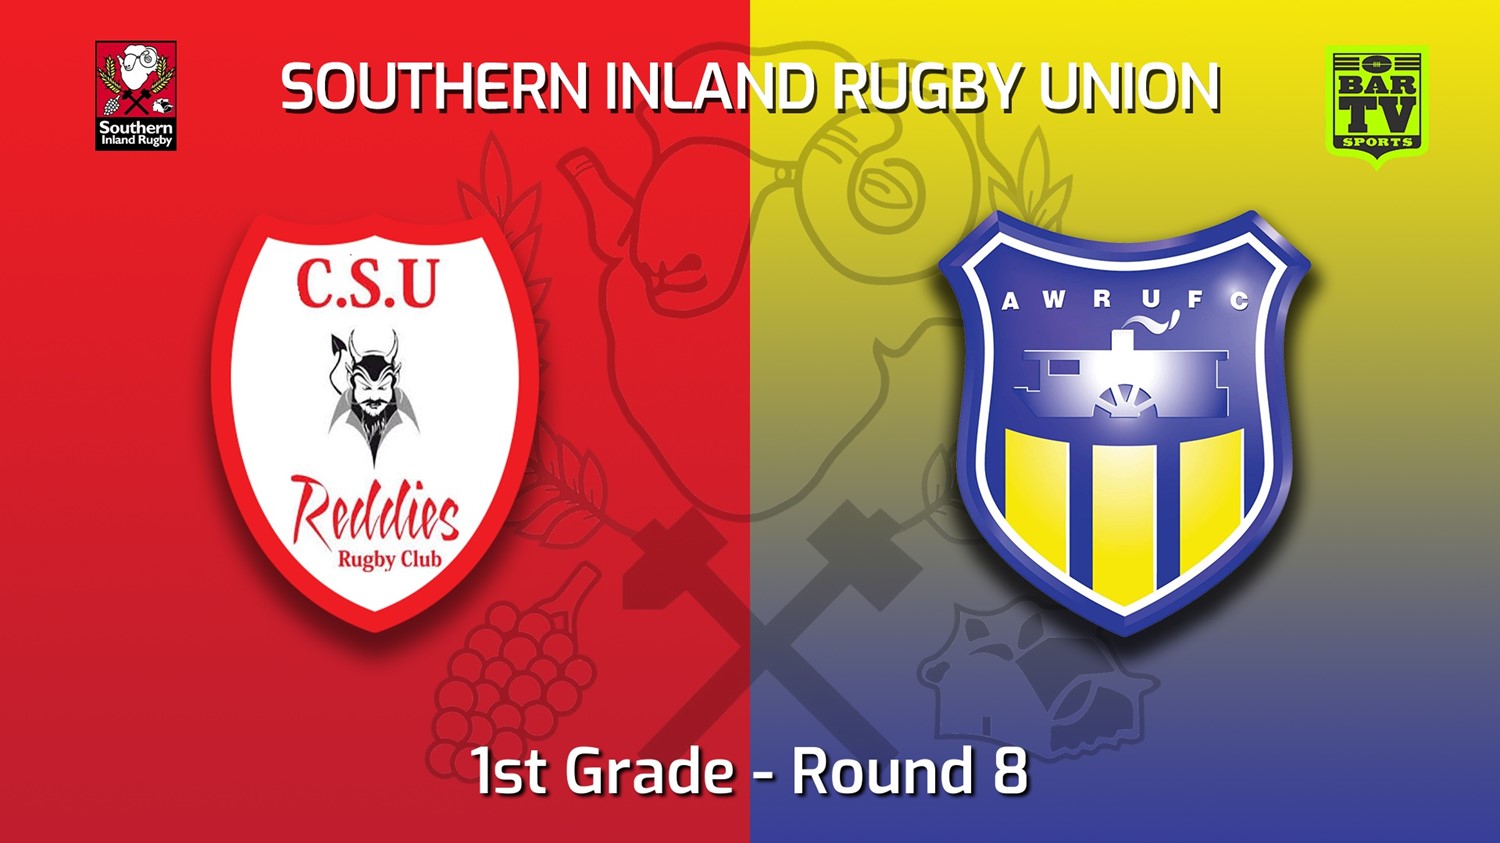 220528-Southern Inland Rugby Union Round 8 - 1st Grade - CSU Reddies v Albury Steamers Slate Image